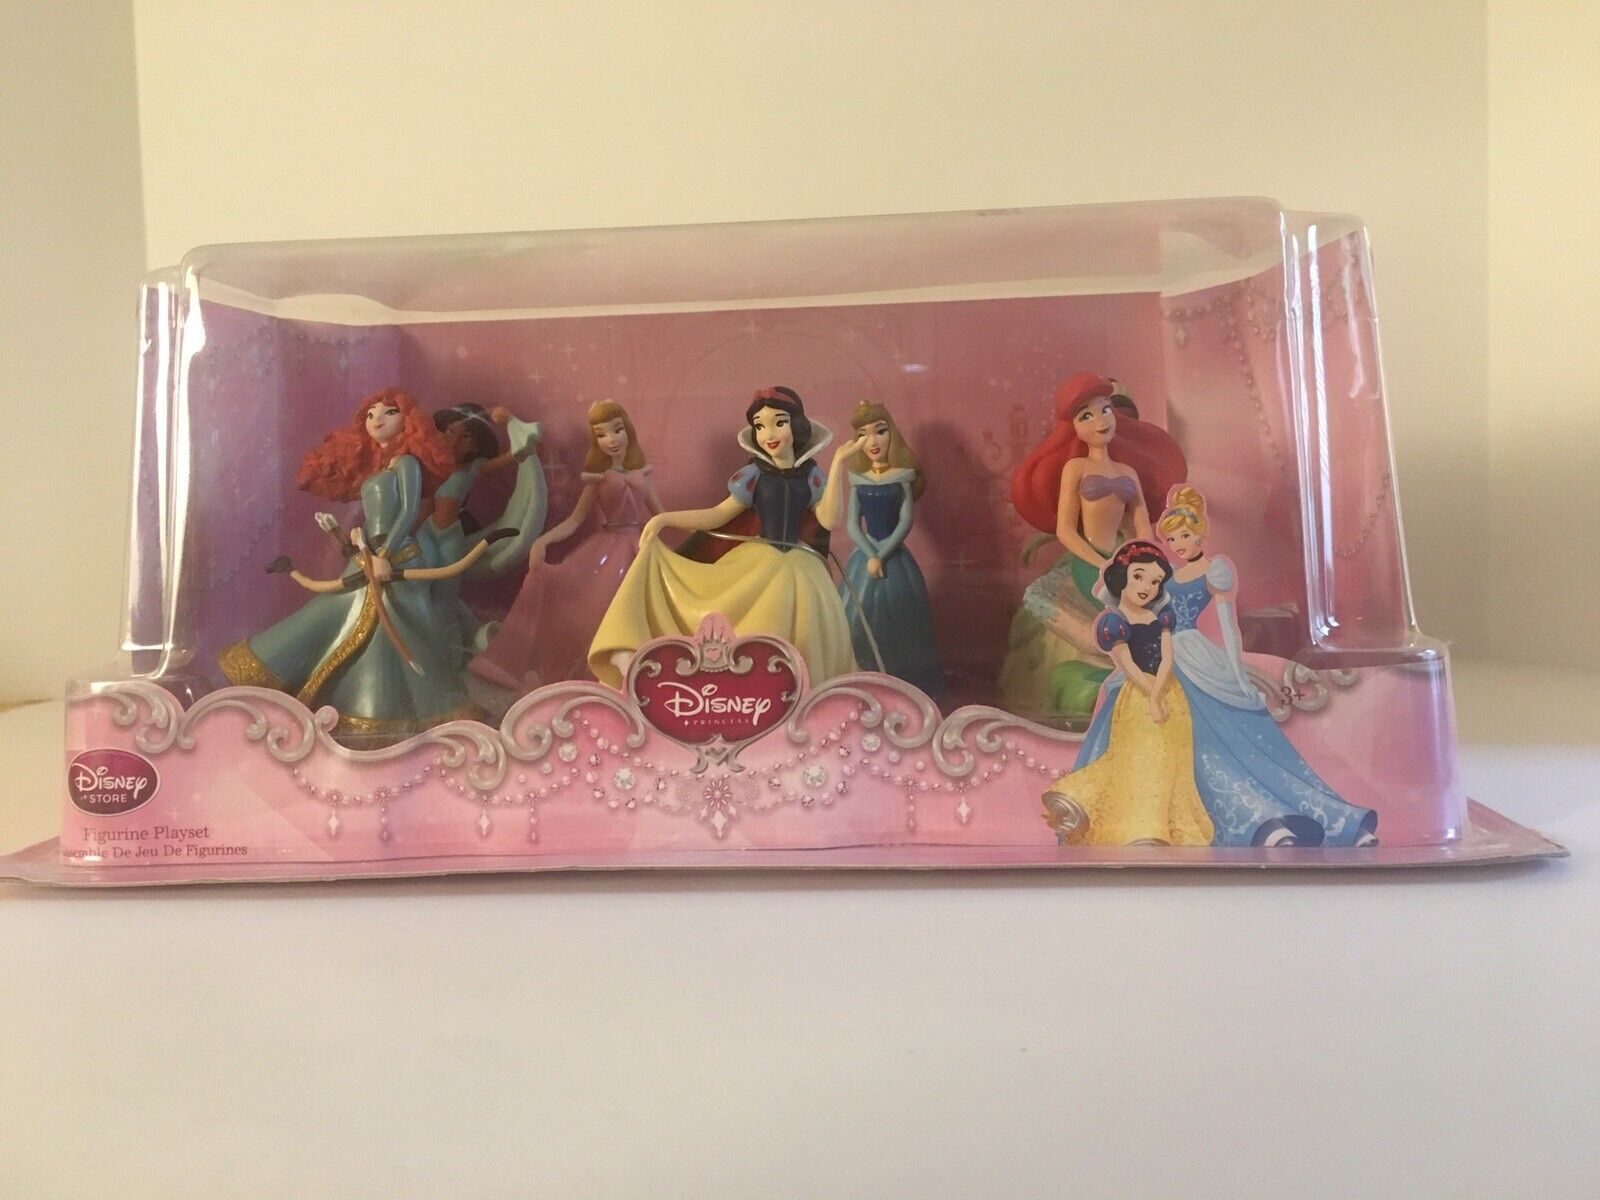 Disney Store (Disney Princess Collection) 7 Piece Figurine Set - NEW